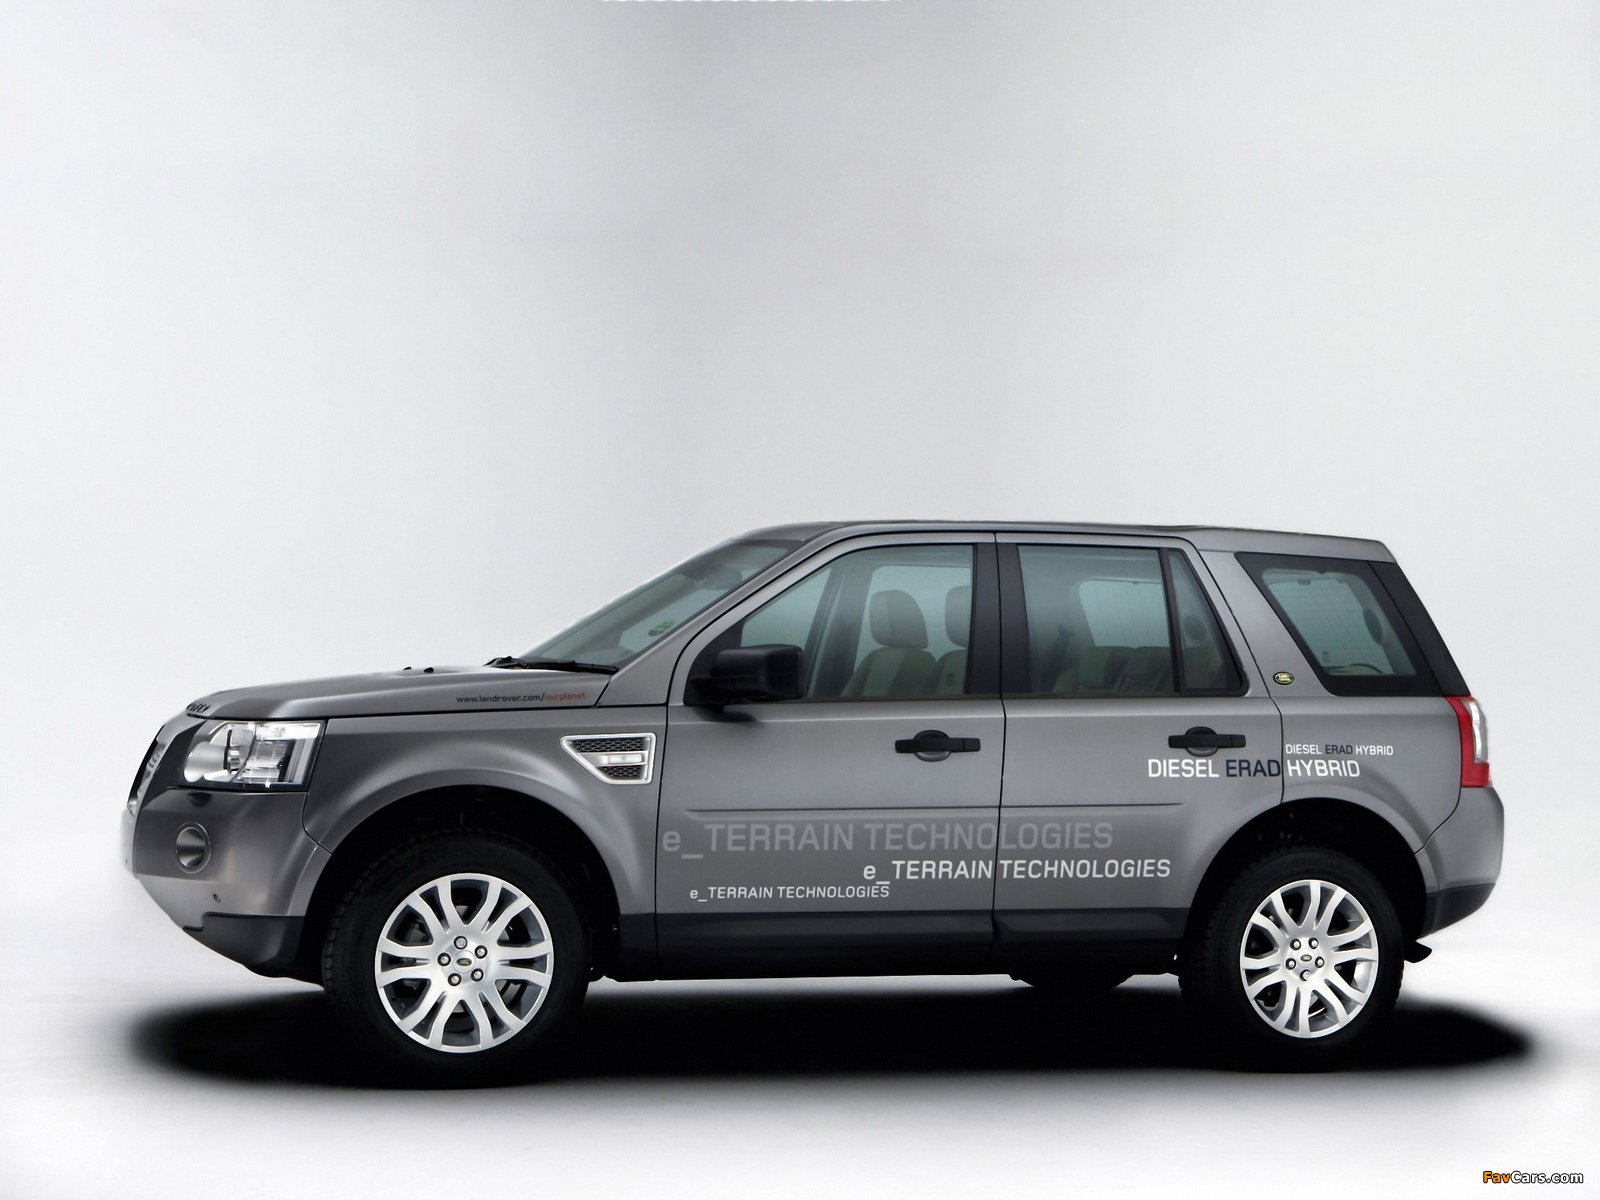 Pictures of Land Rover Diesel ERAD Hybrid Prototype 2008 (1600 x 1200)